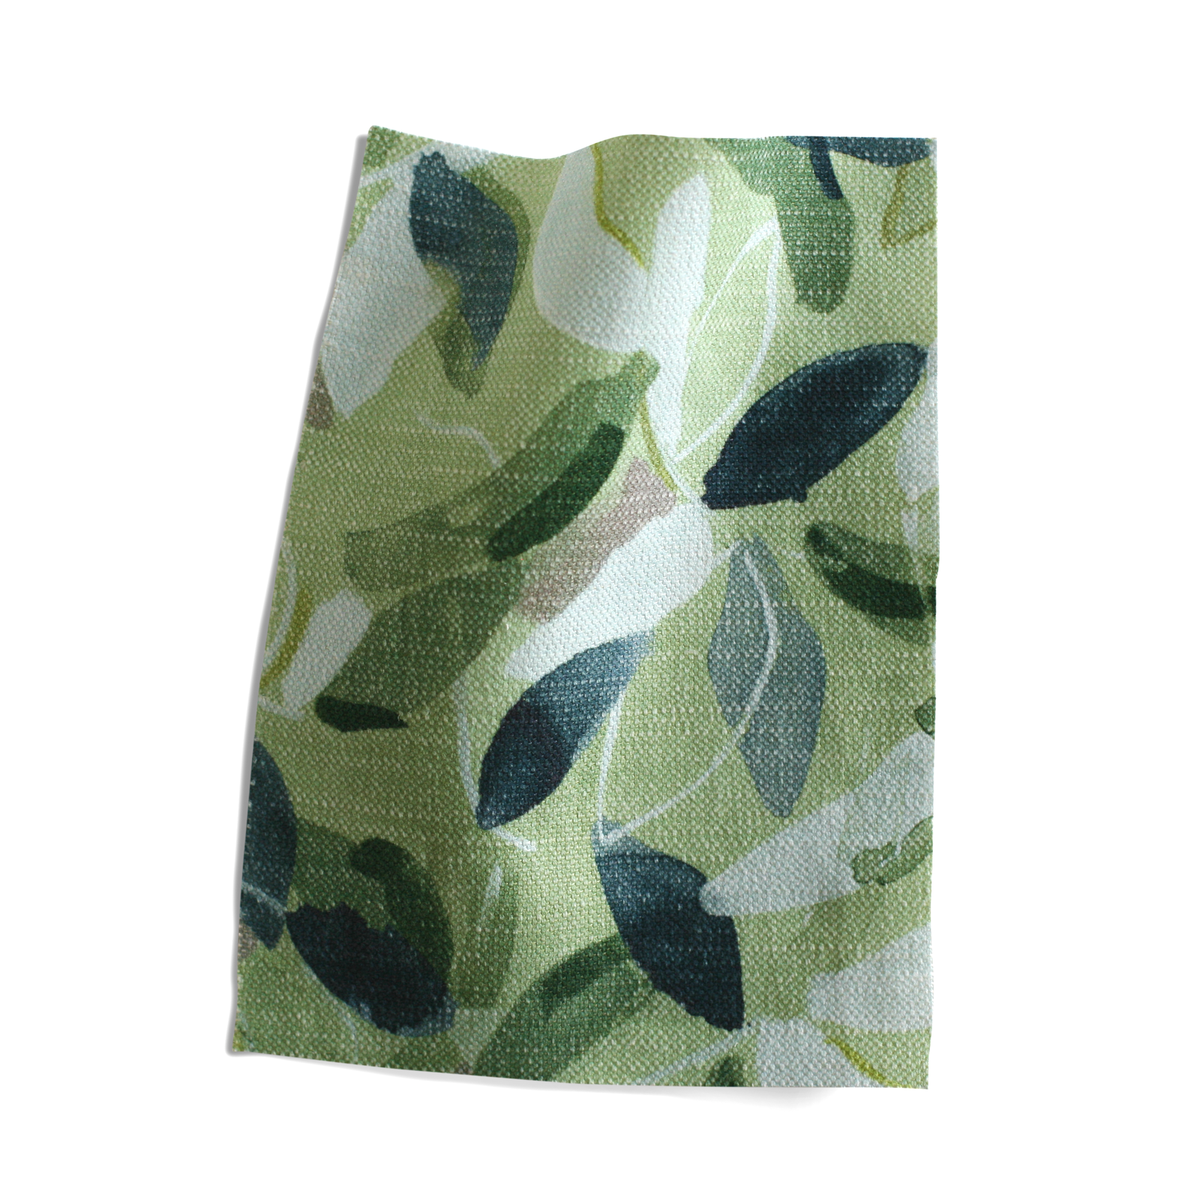 Laurel Fabric in Green